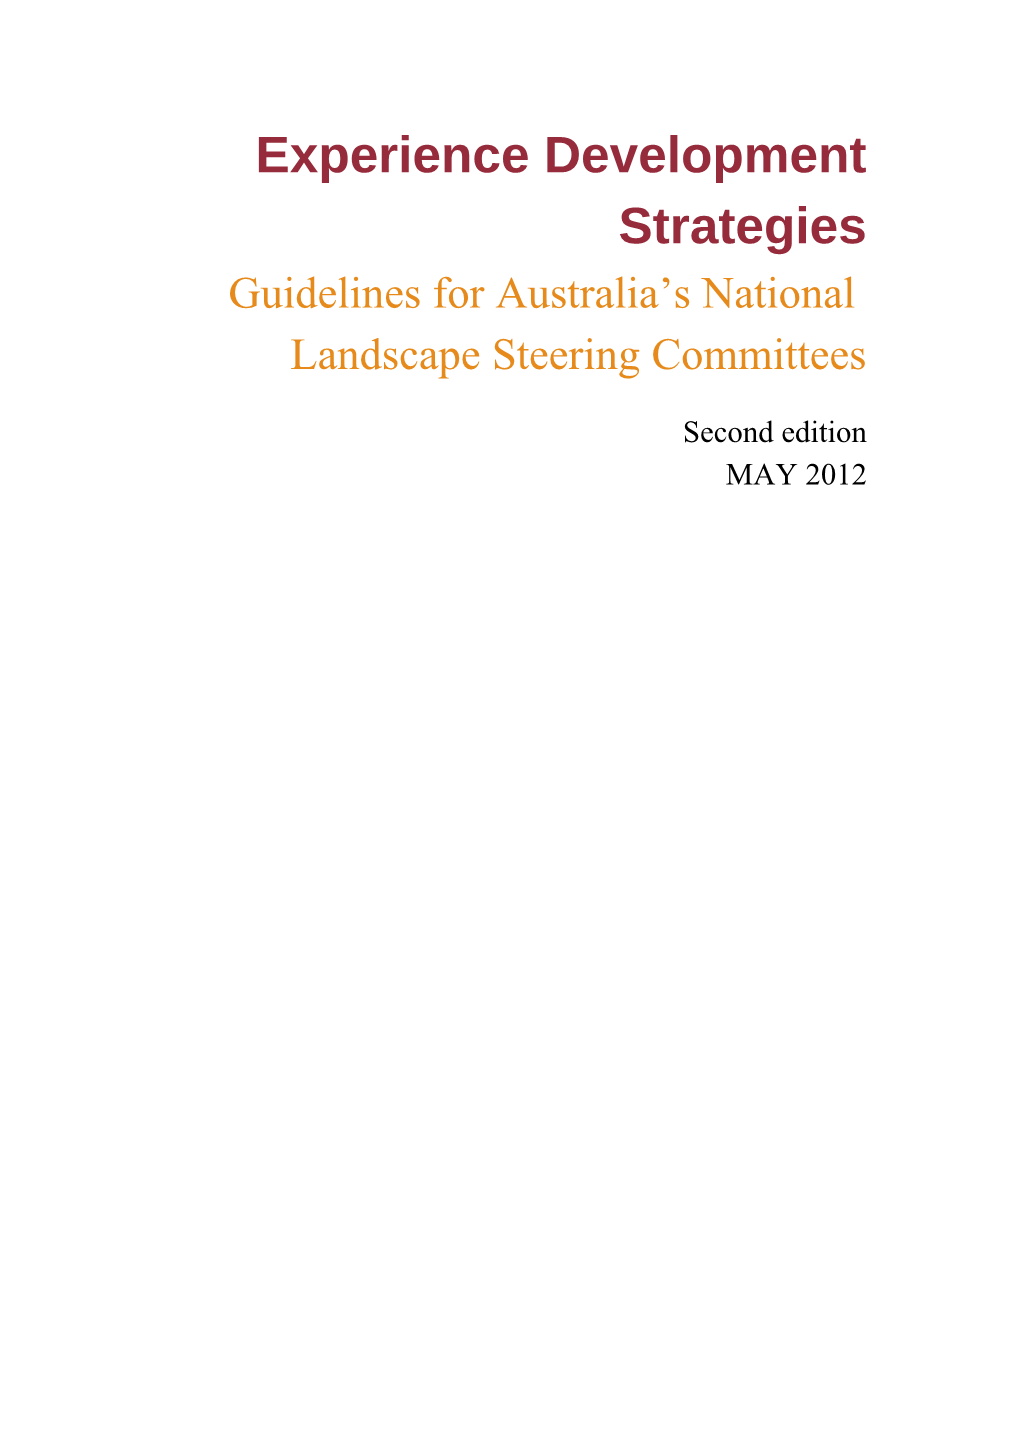 Experience Development Strategies - Guidelines for Australia's National Landscape Steering